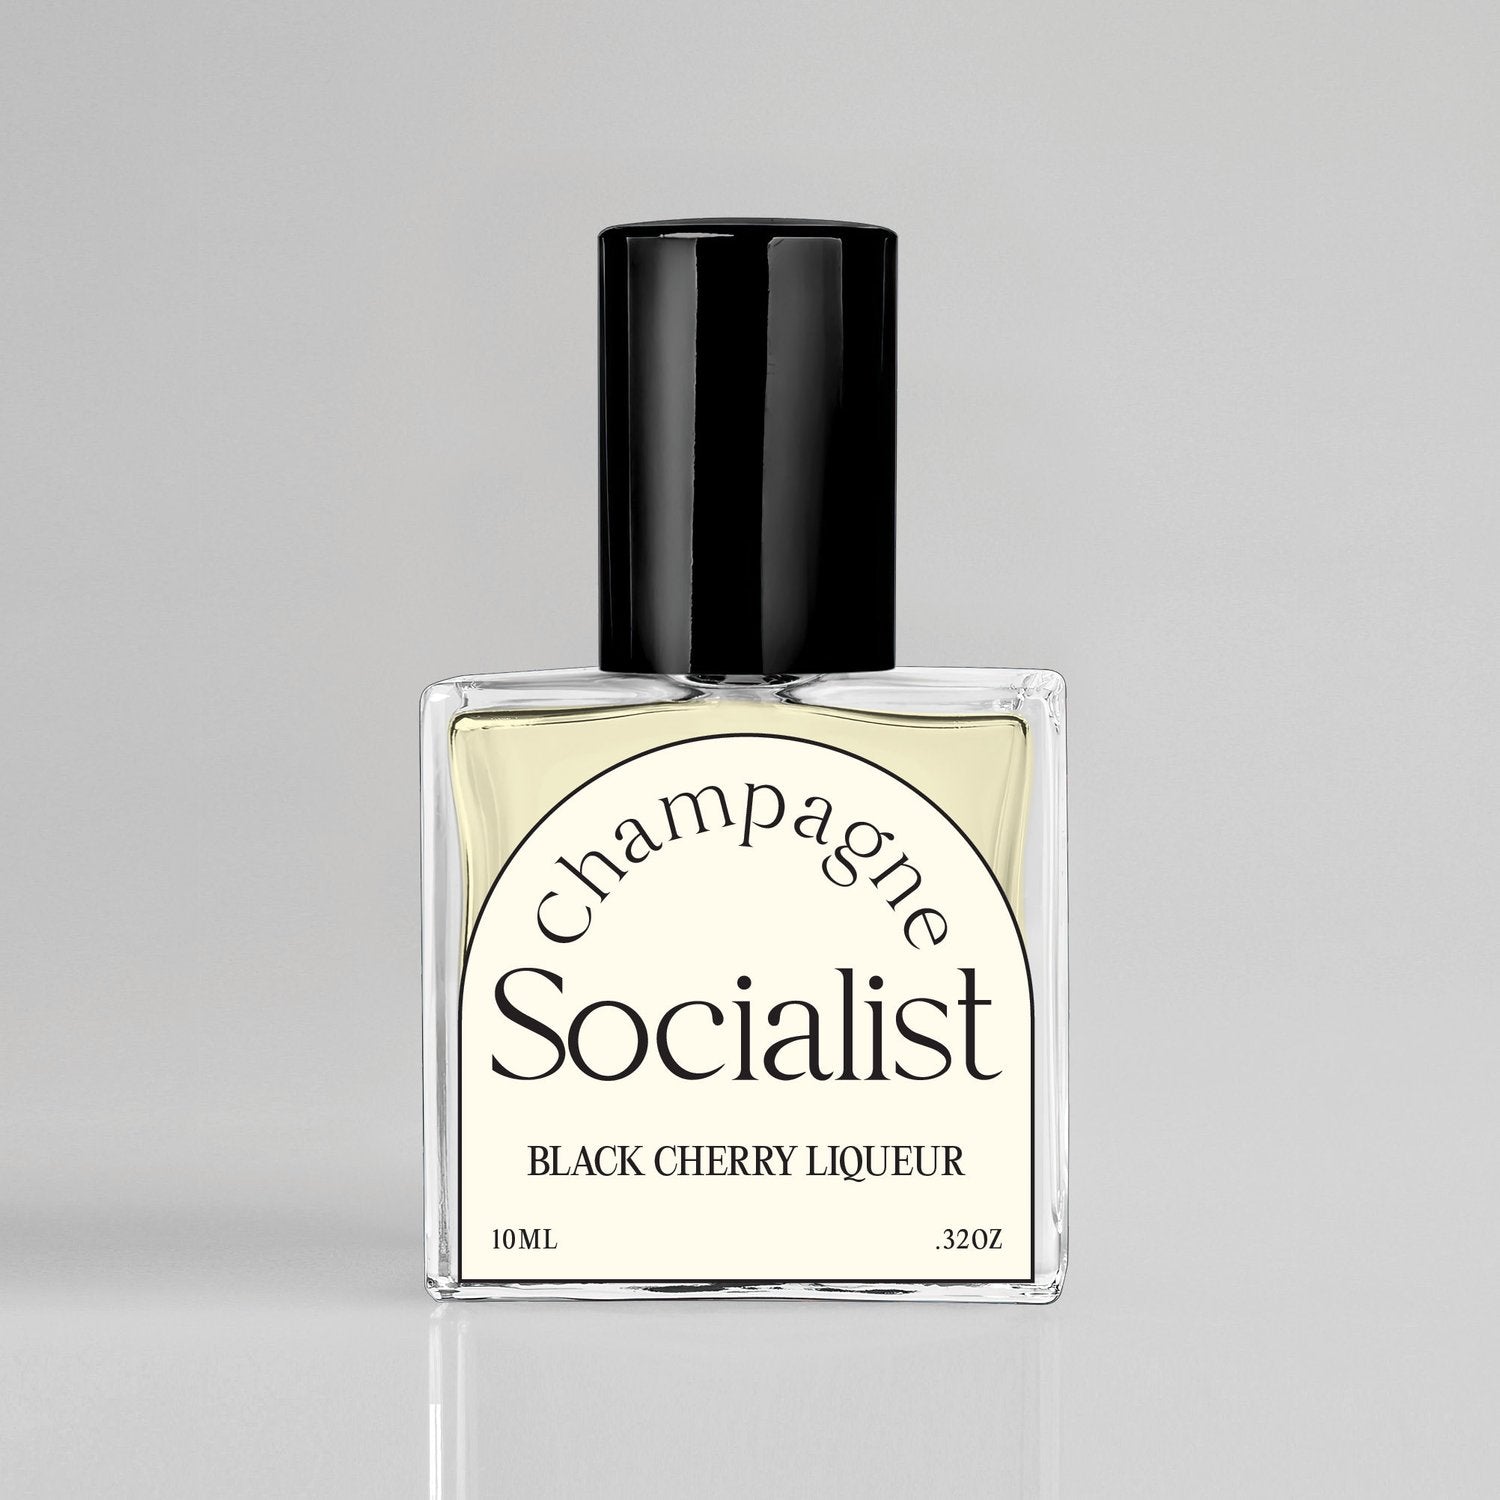 Champagne Socialist Black Cherry Liqueur Perfume Oil